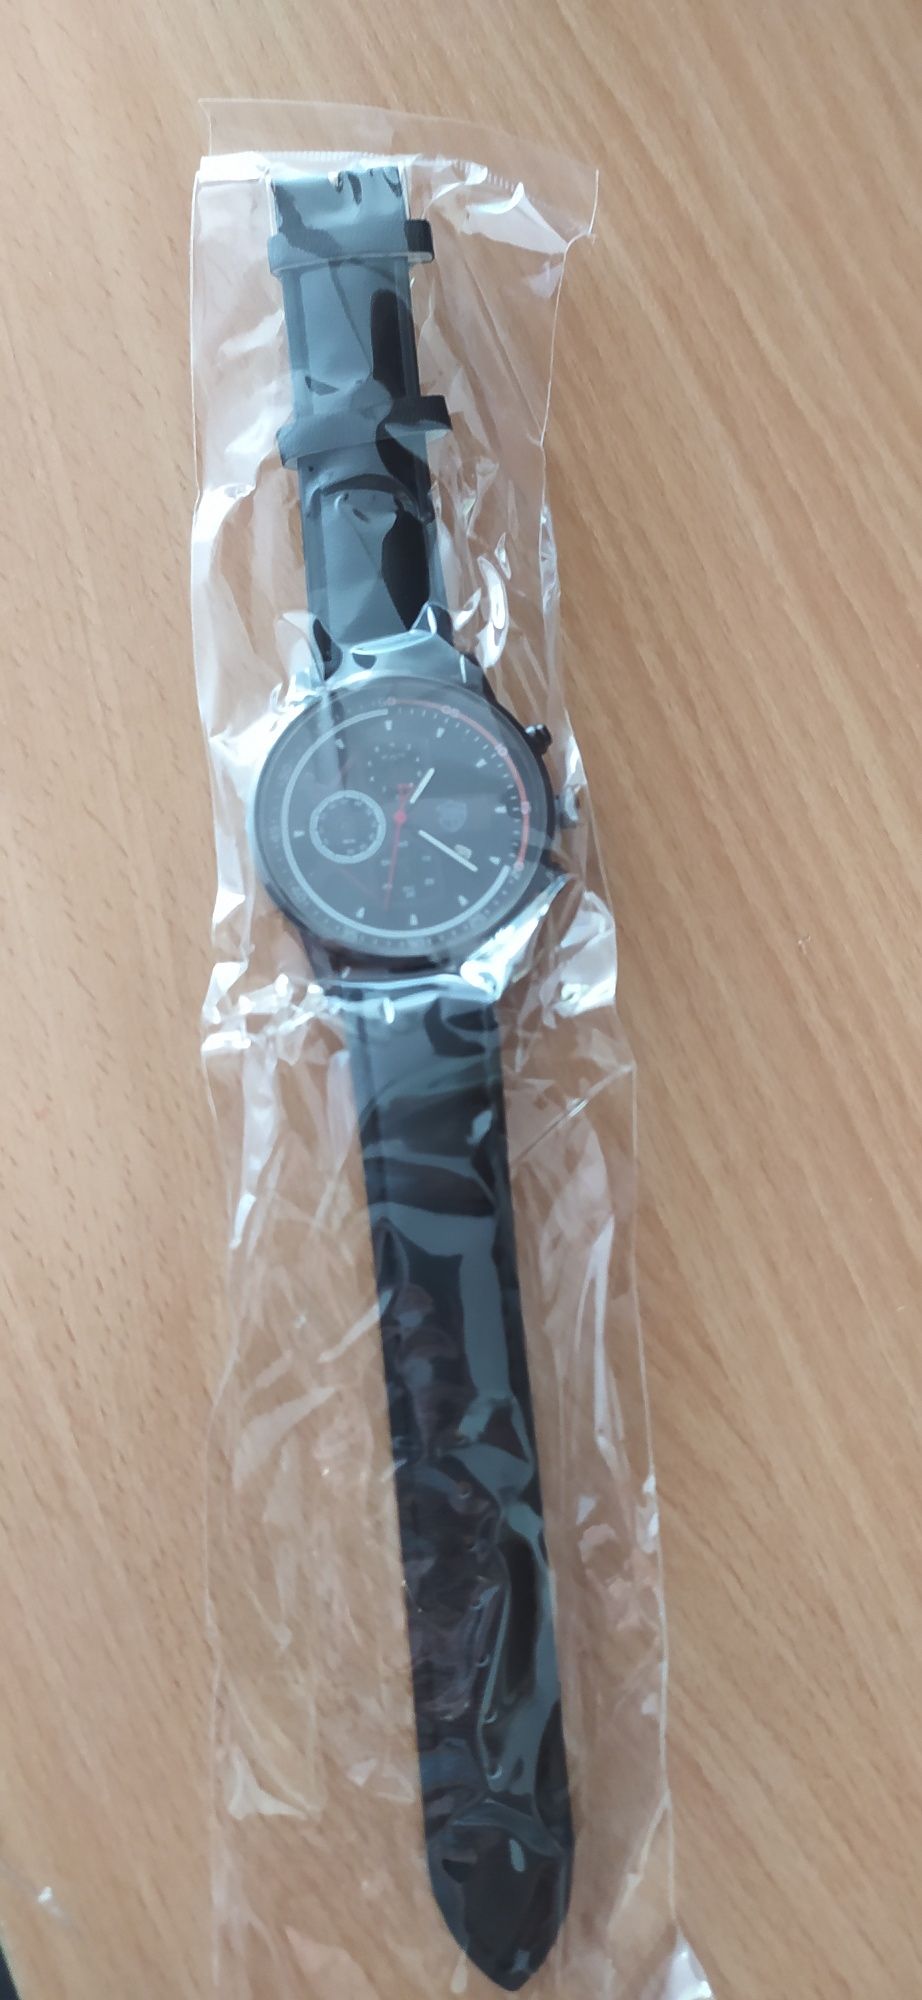 Nowy zegarek, czarny pasek + naszyjnik gratis